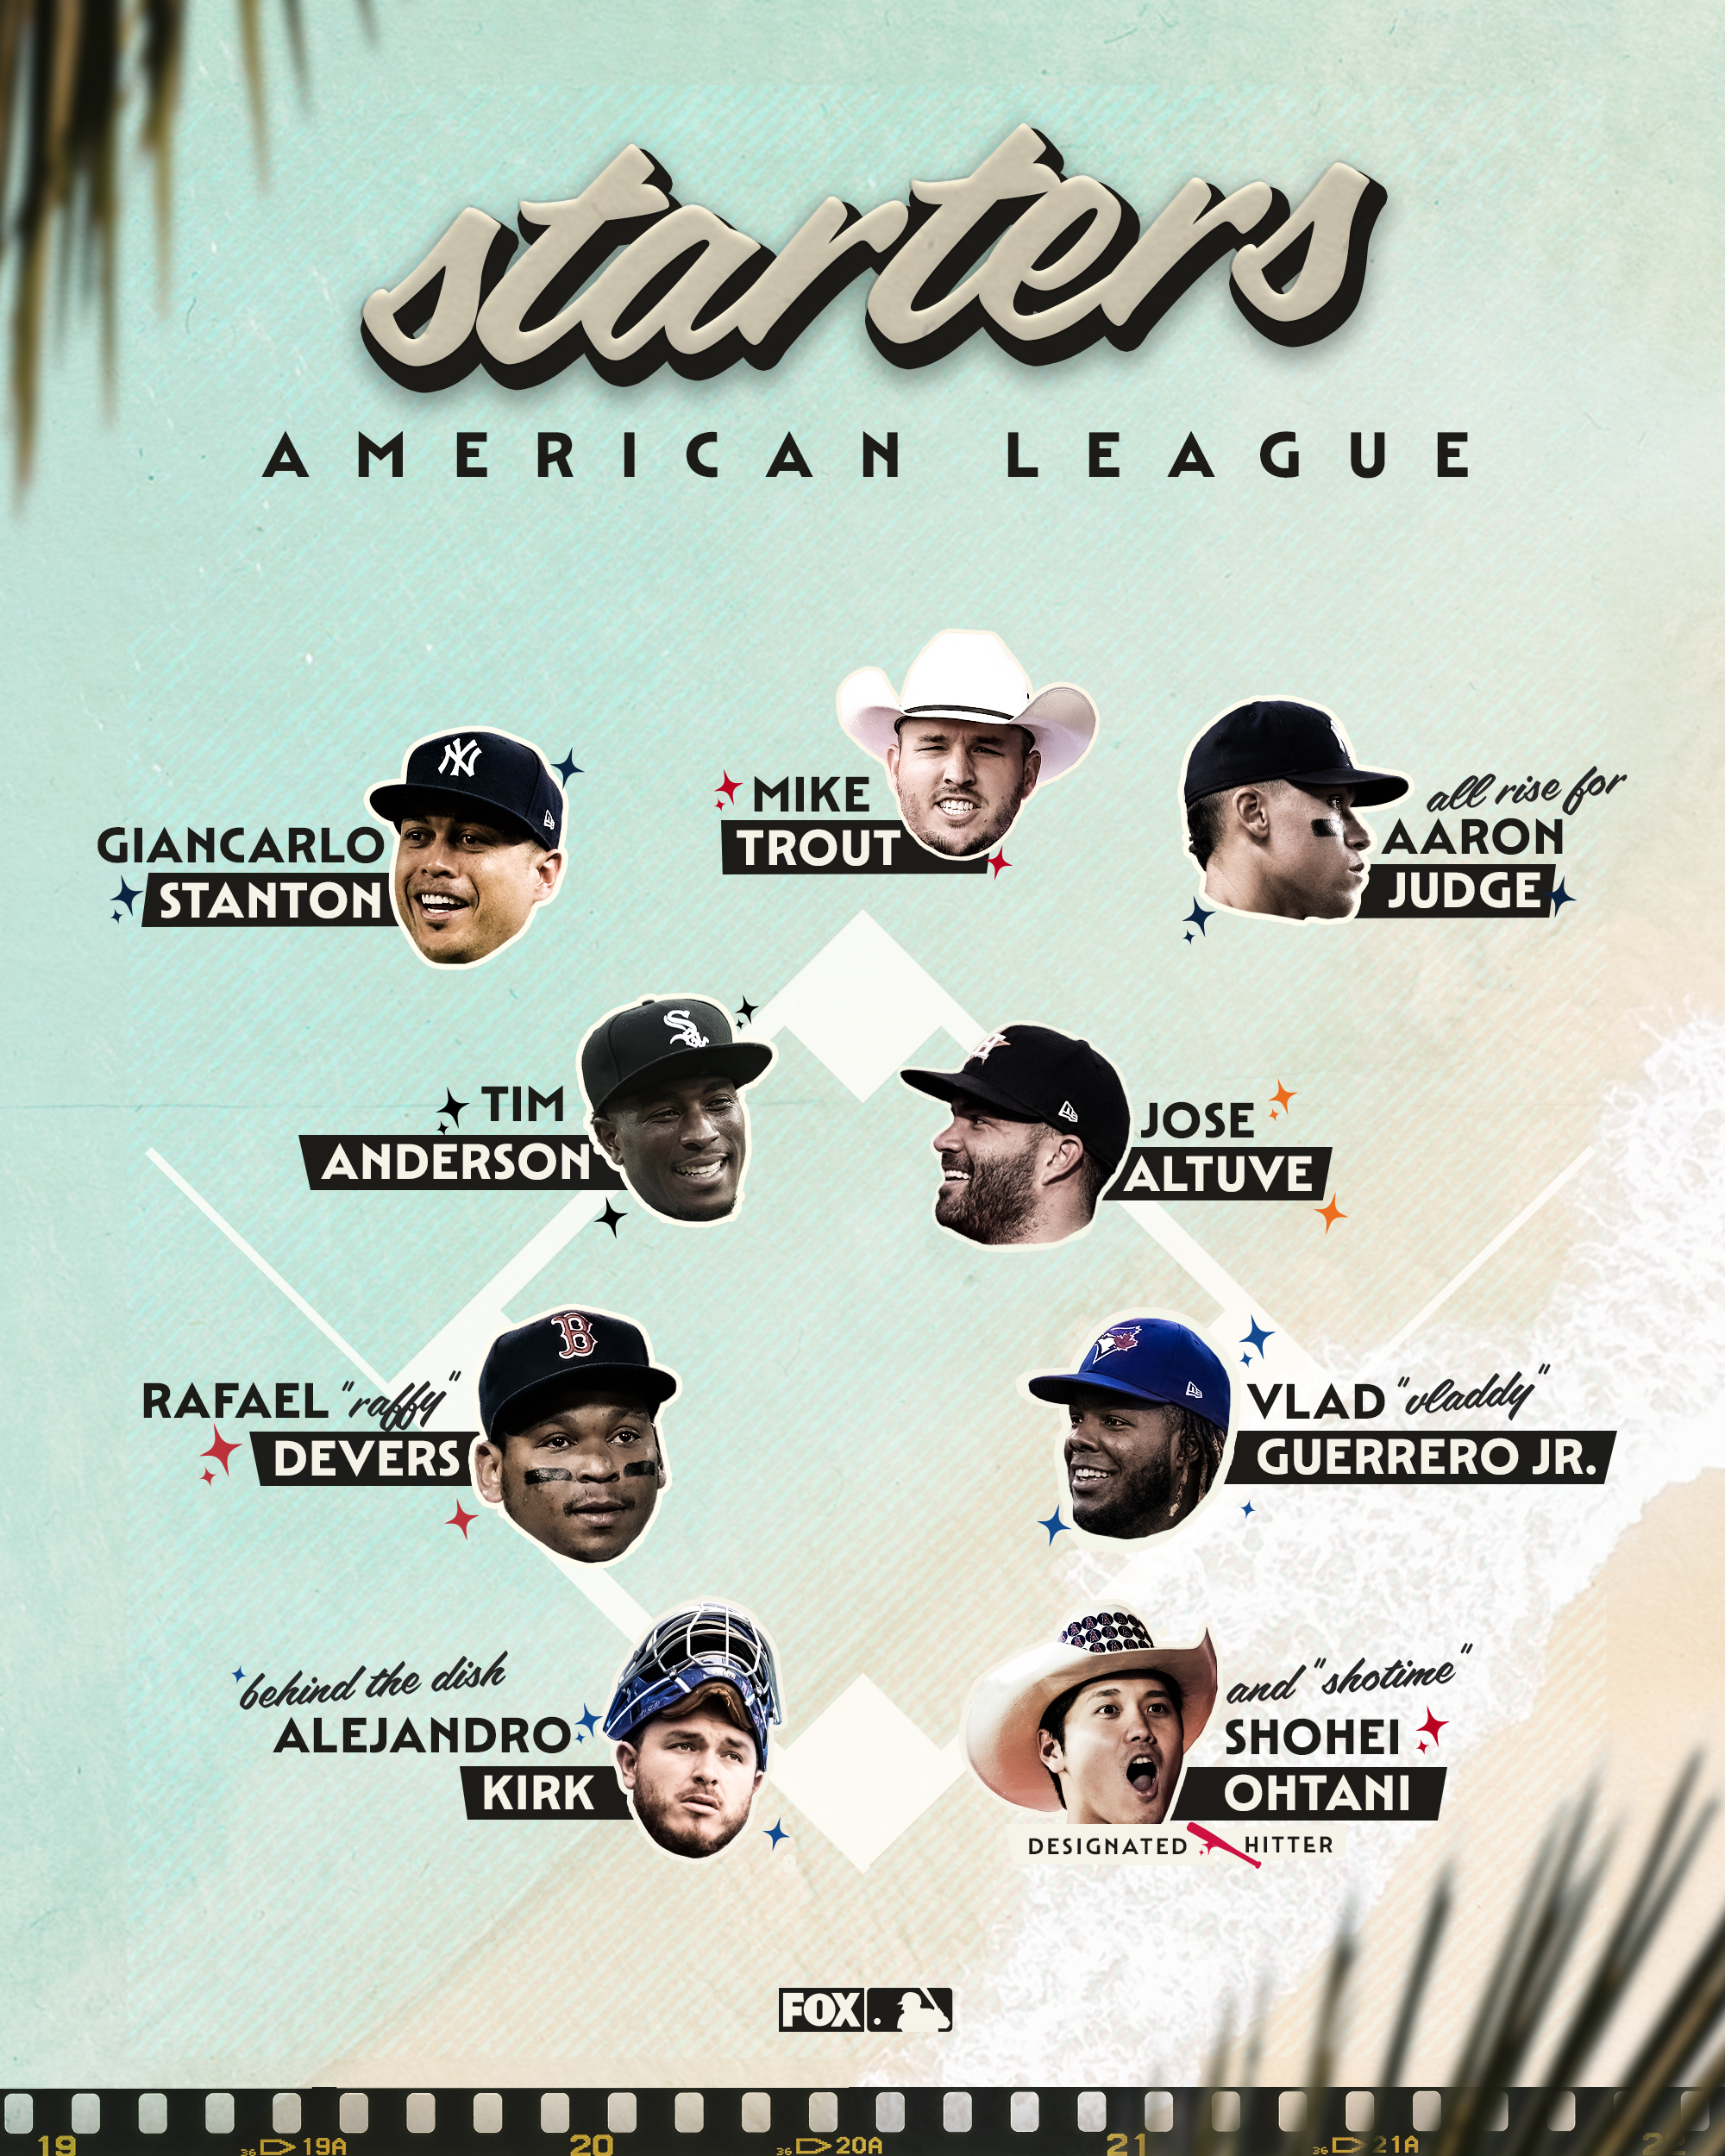 2022 MLB All-Star Game starters